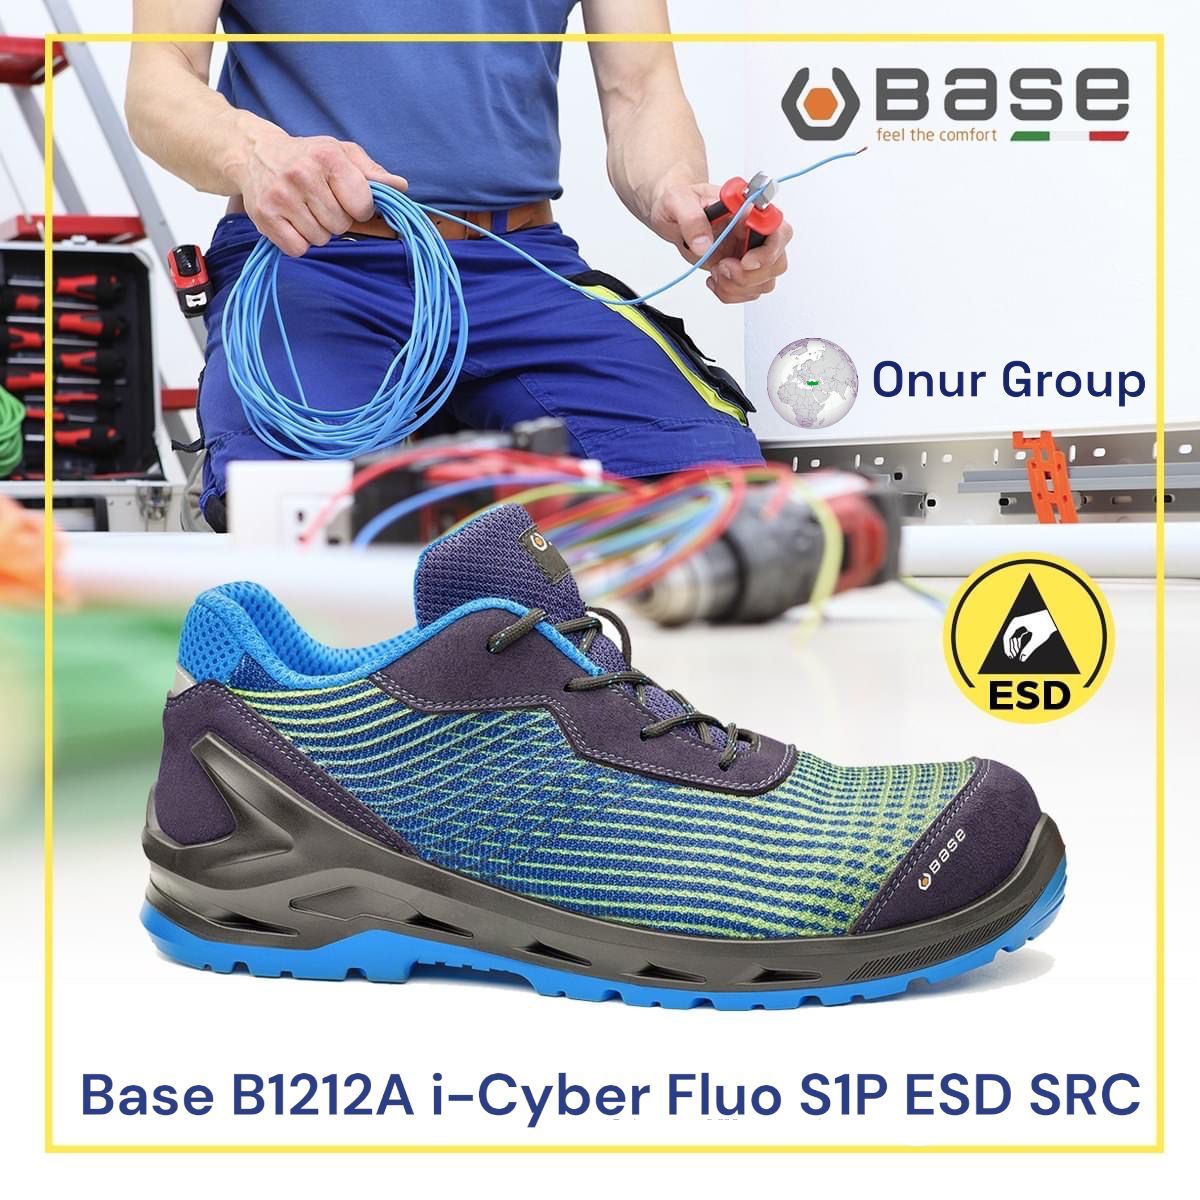 Base B1212A i-Cyber Fluo S1P ESD SRC